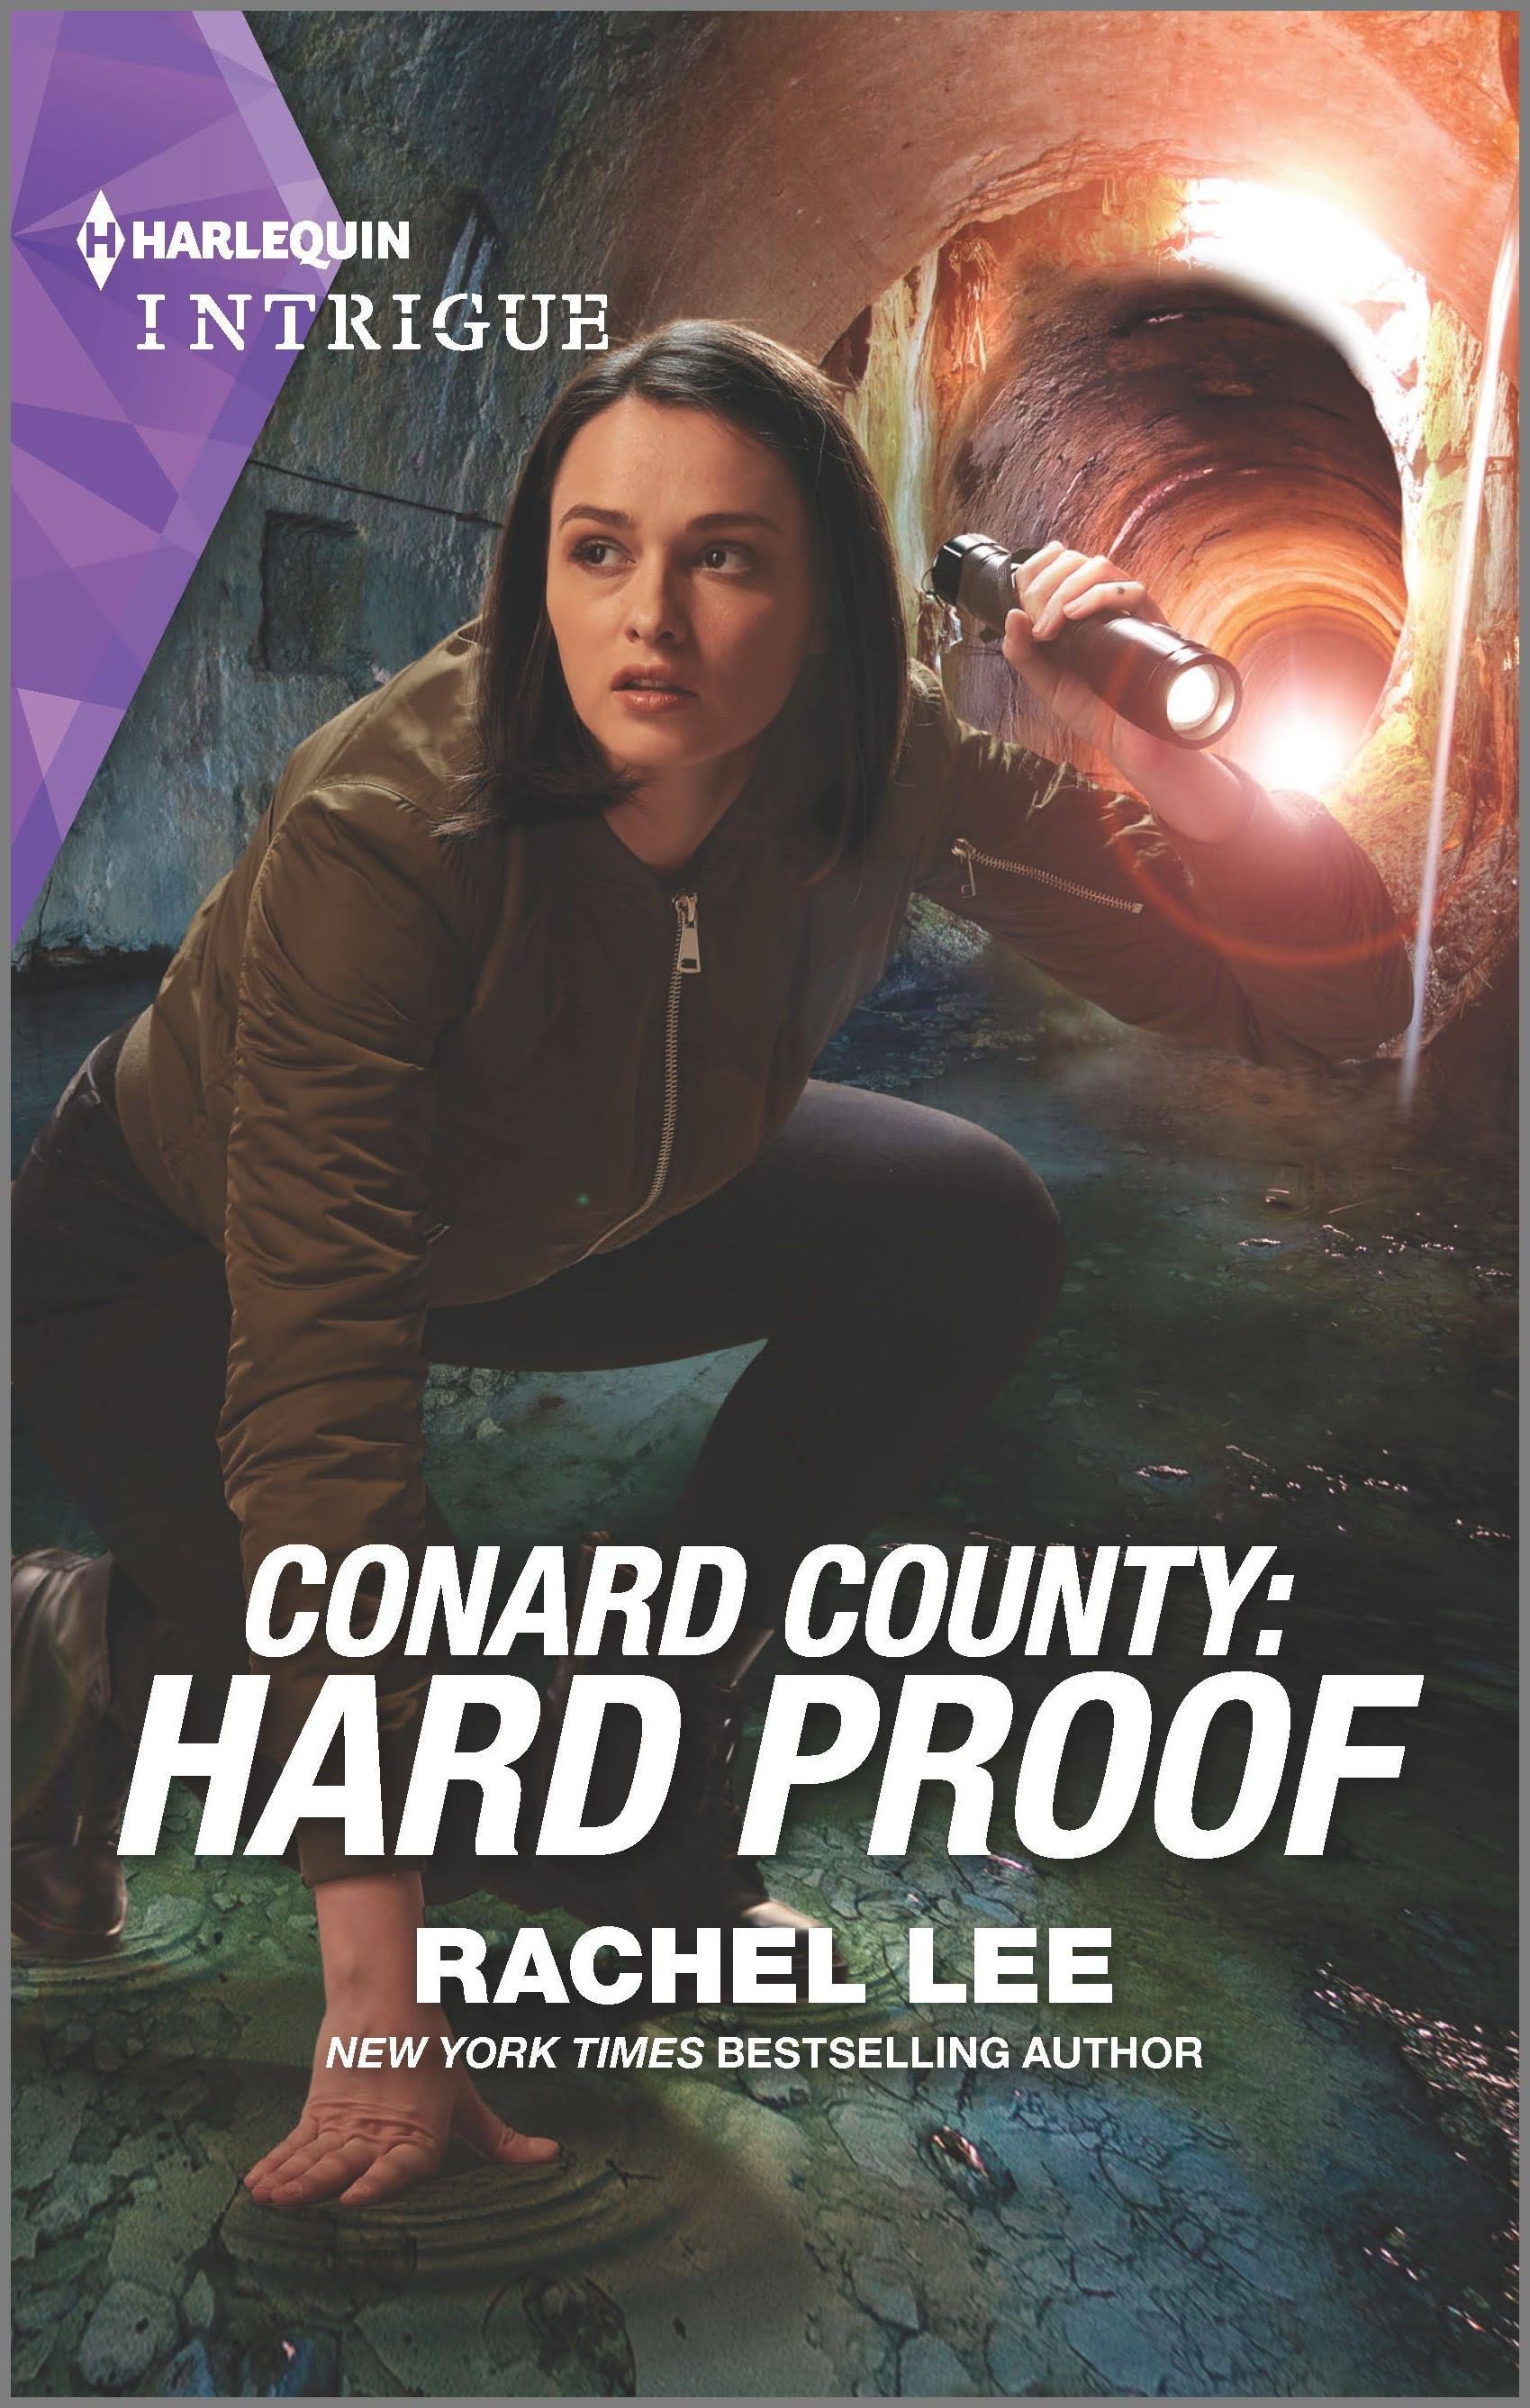 Conard County: Hard Proof [Book]